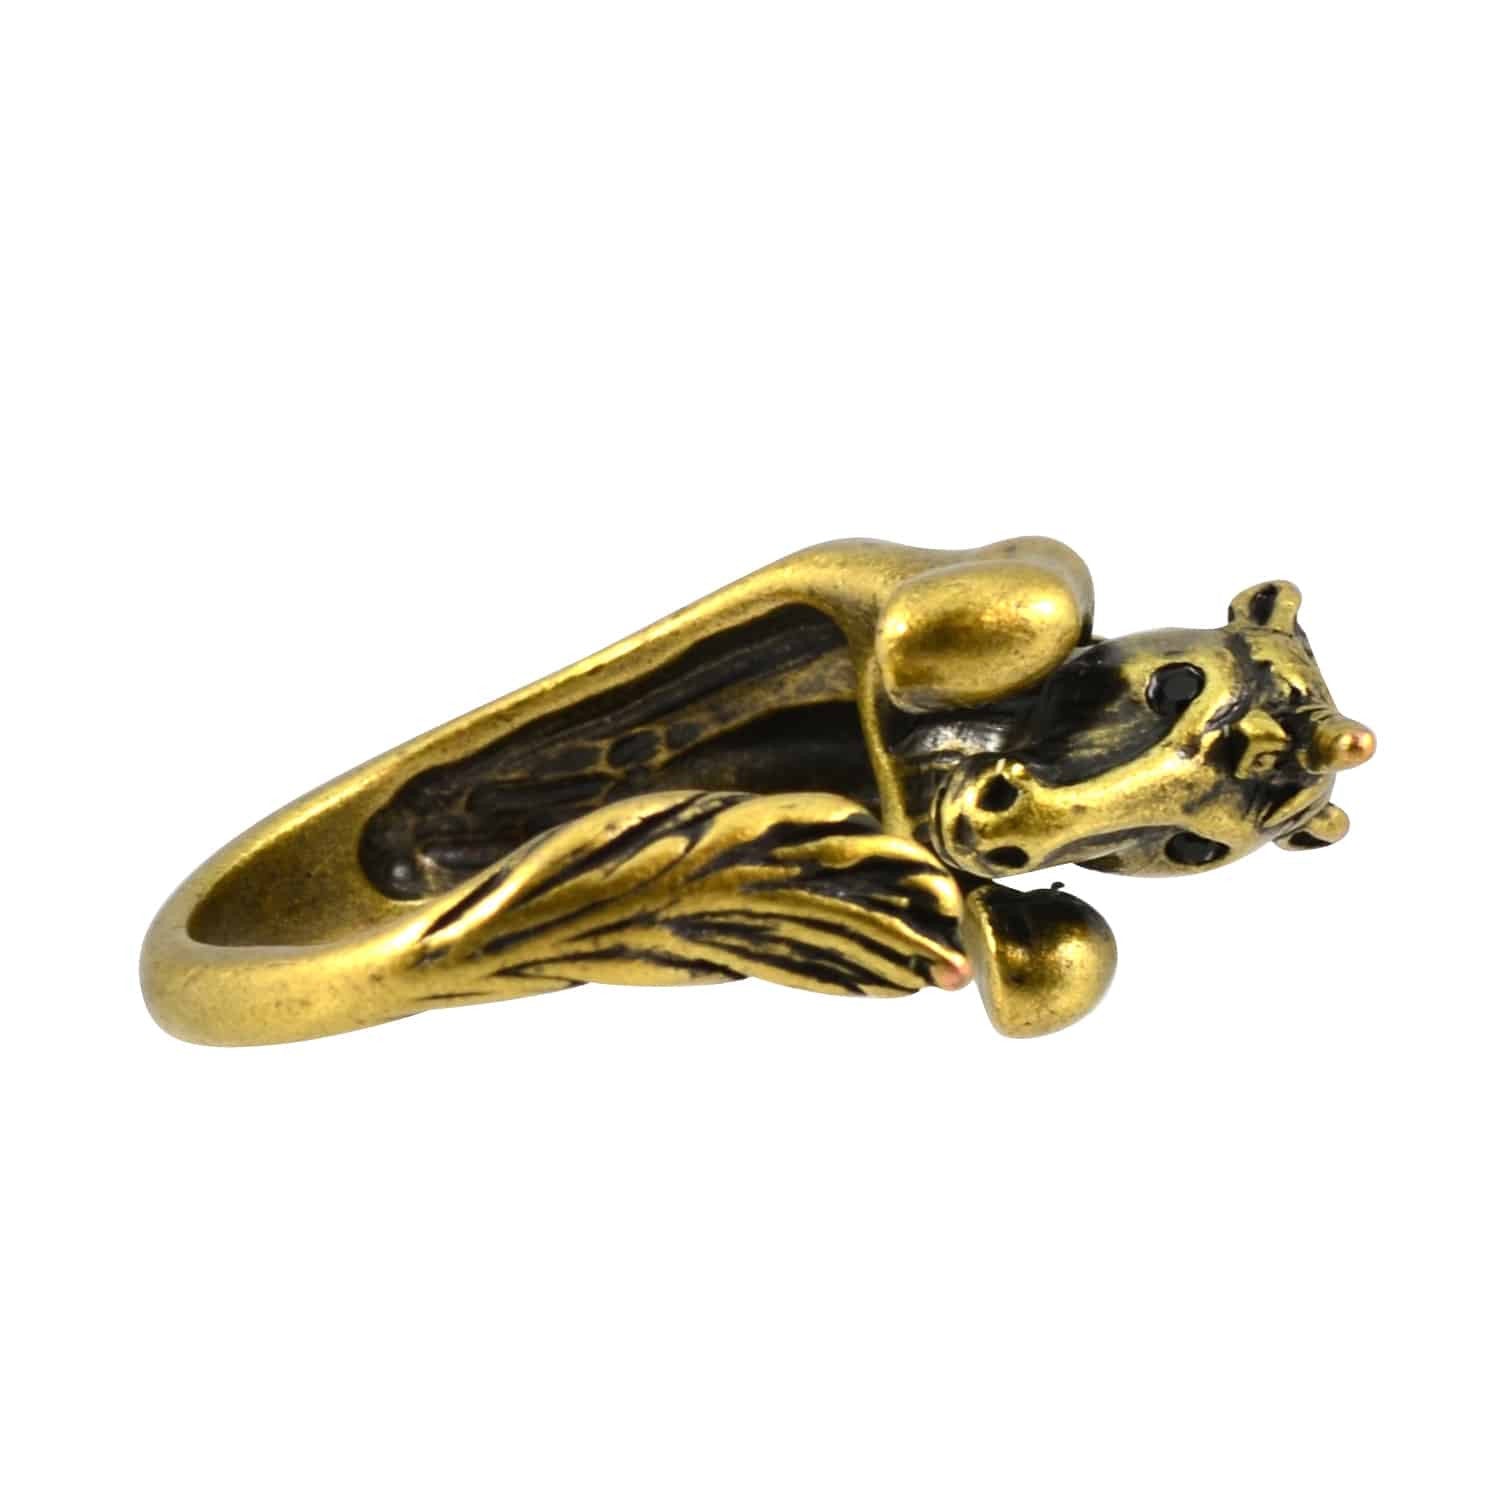 Enreverie Unicorn Wrap Ring, Antique Gold Plated Adjustable